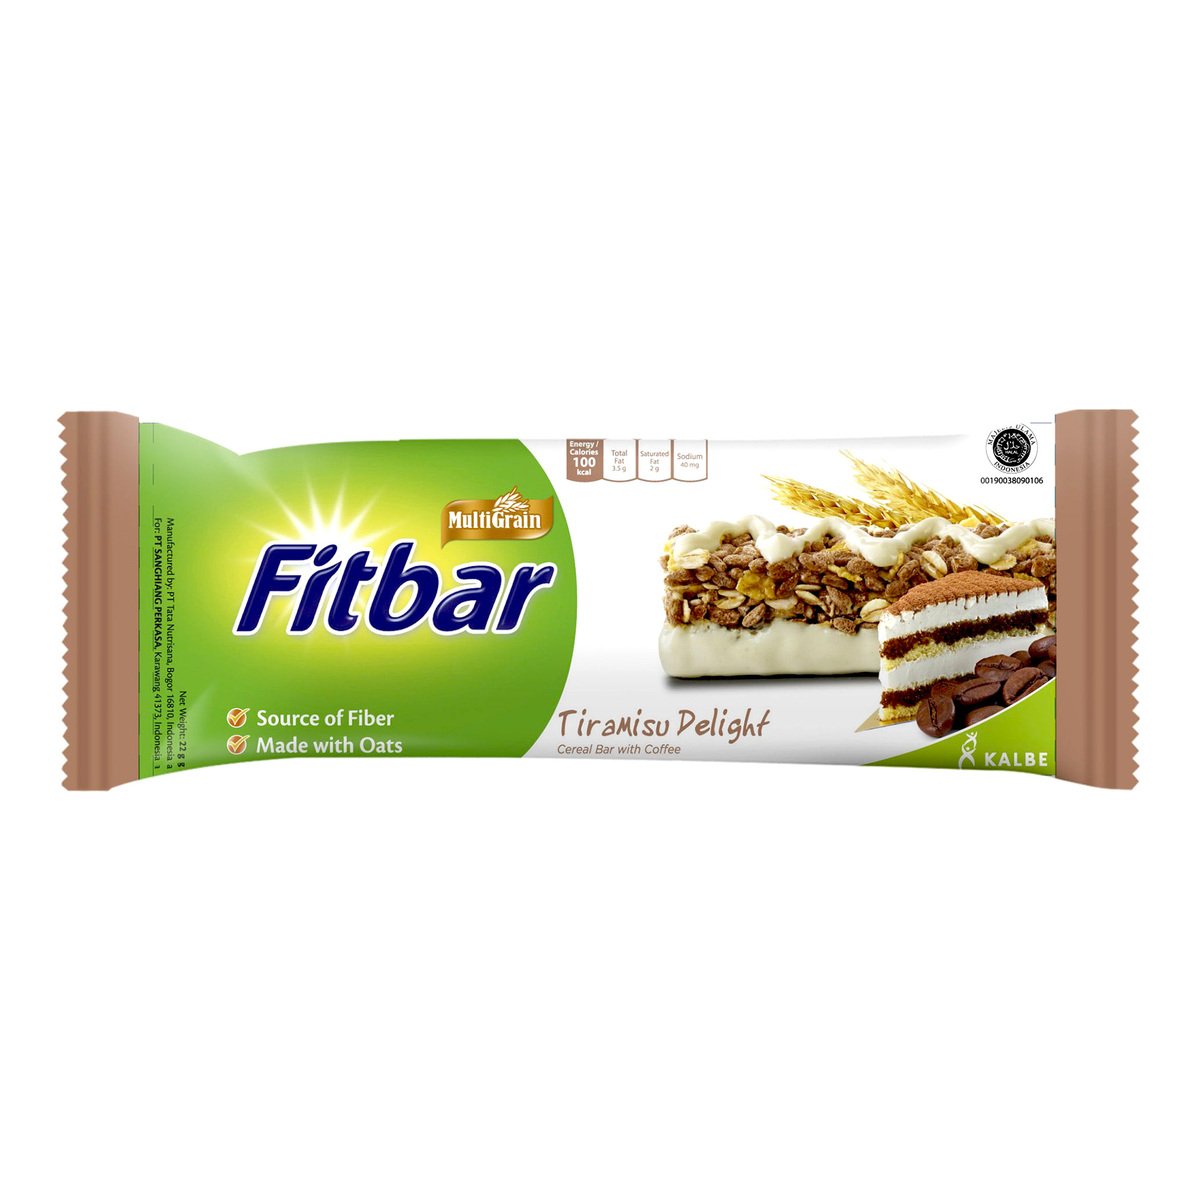 Fitbar Tiramisu Delight Cereal Bar with Coffee 22 g